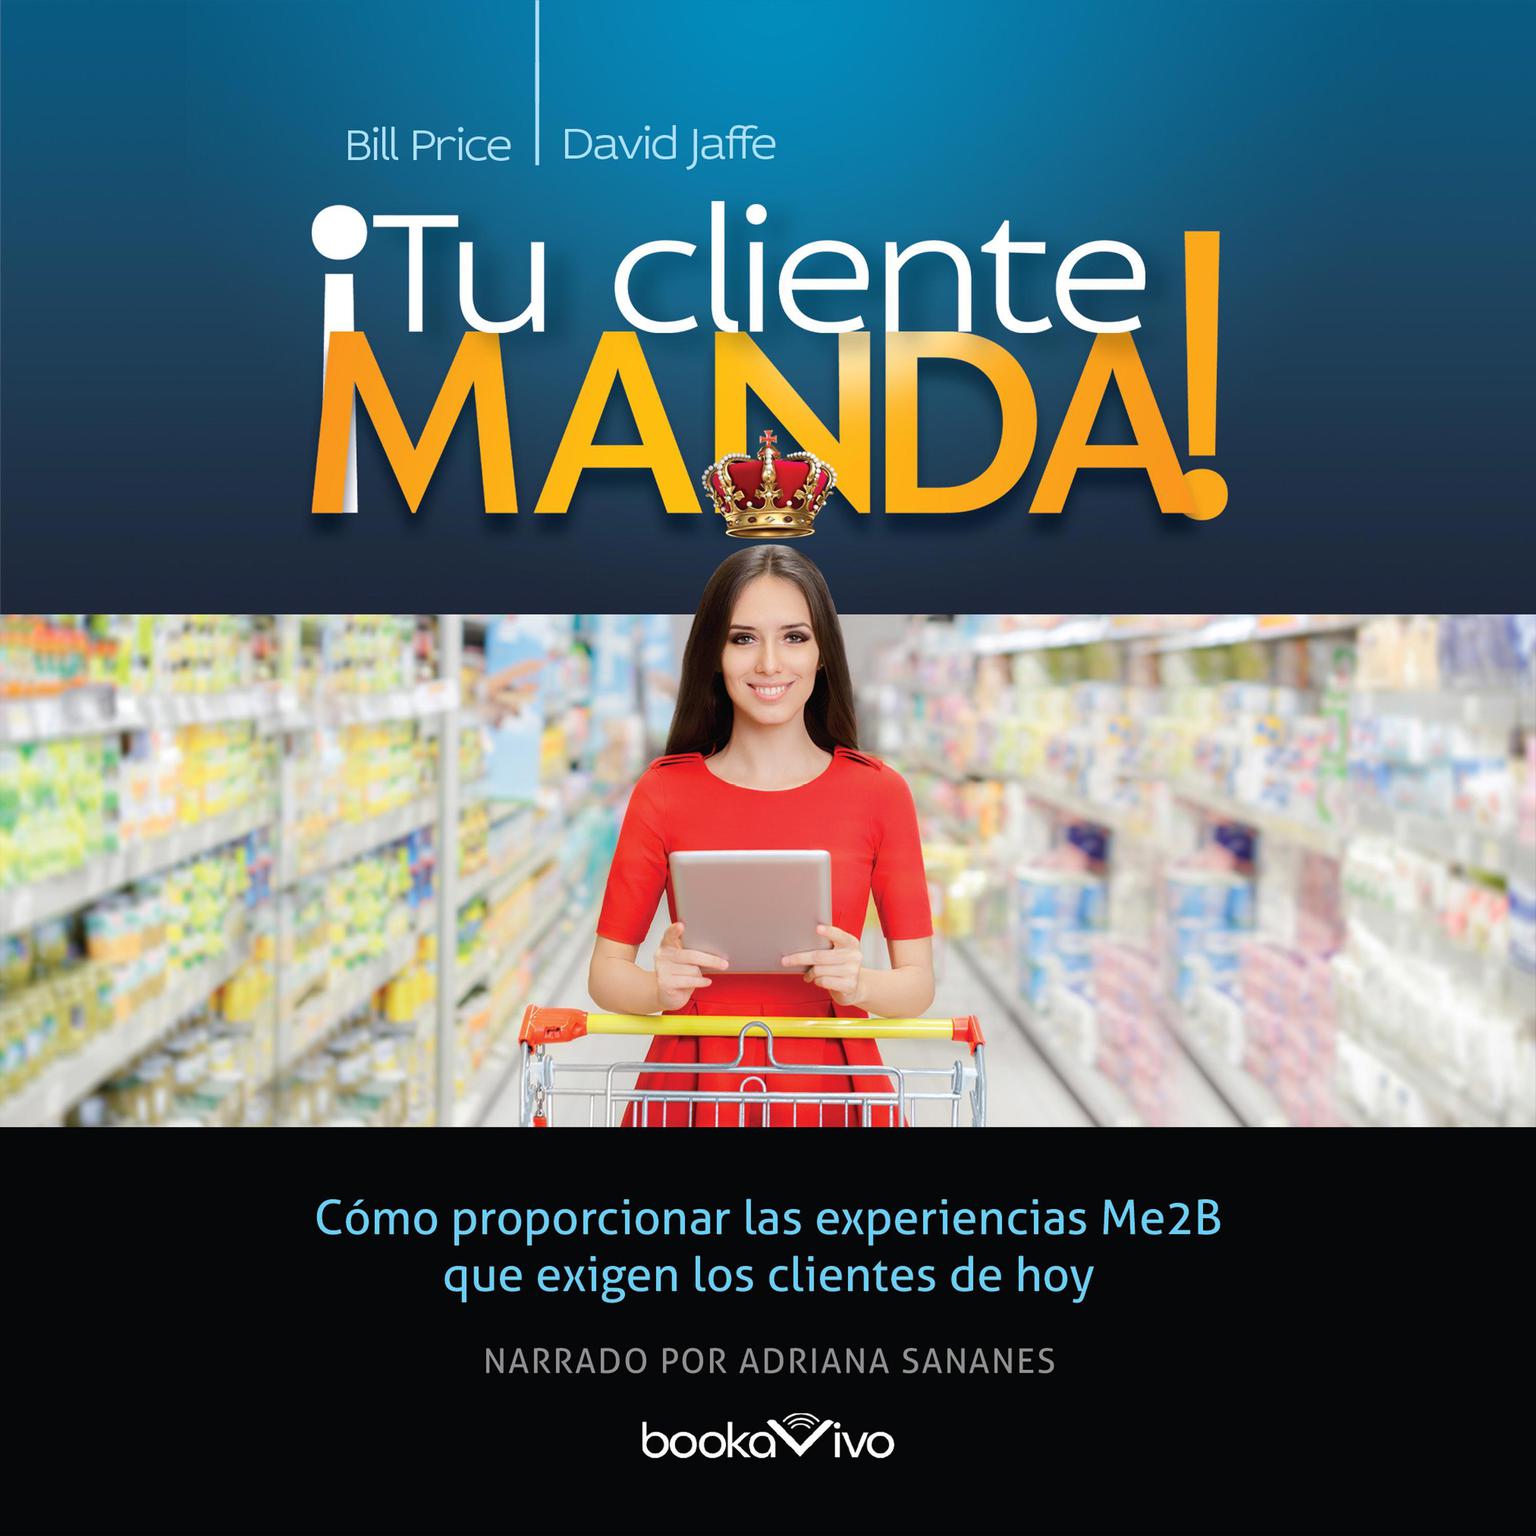 ¡Tu cliente manda! (Your Custom Rules) Audiobook, by Bill Price